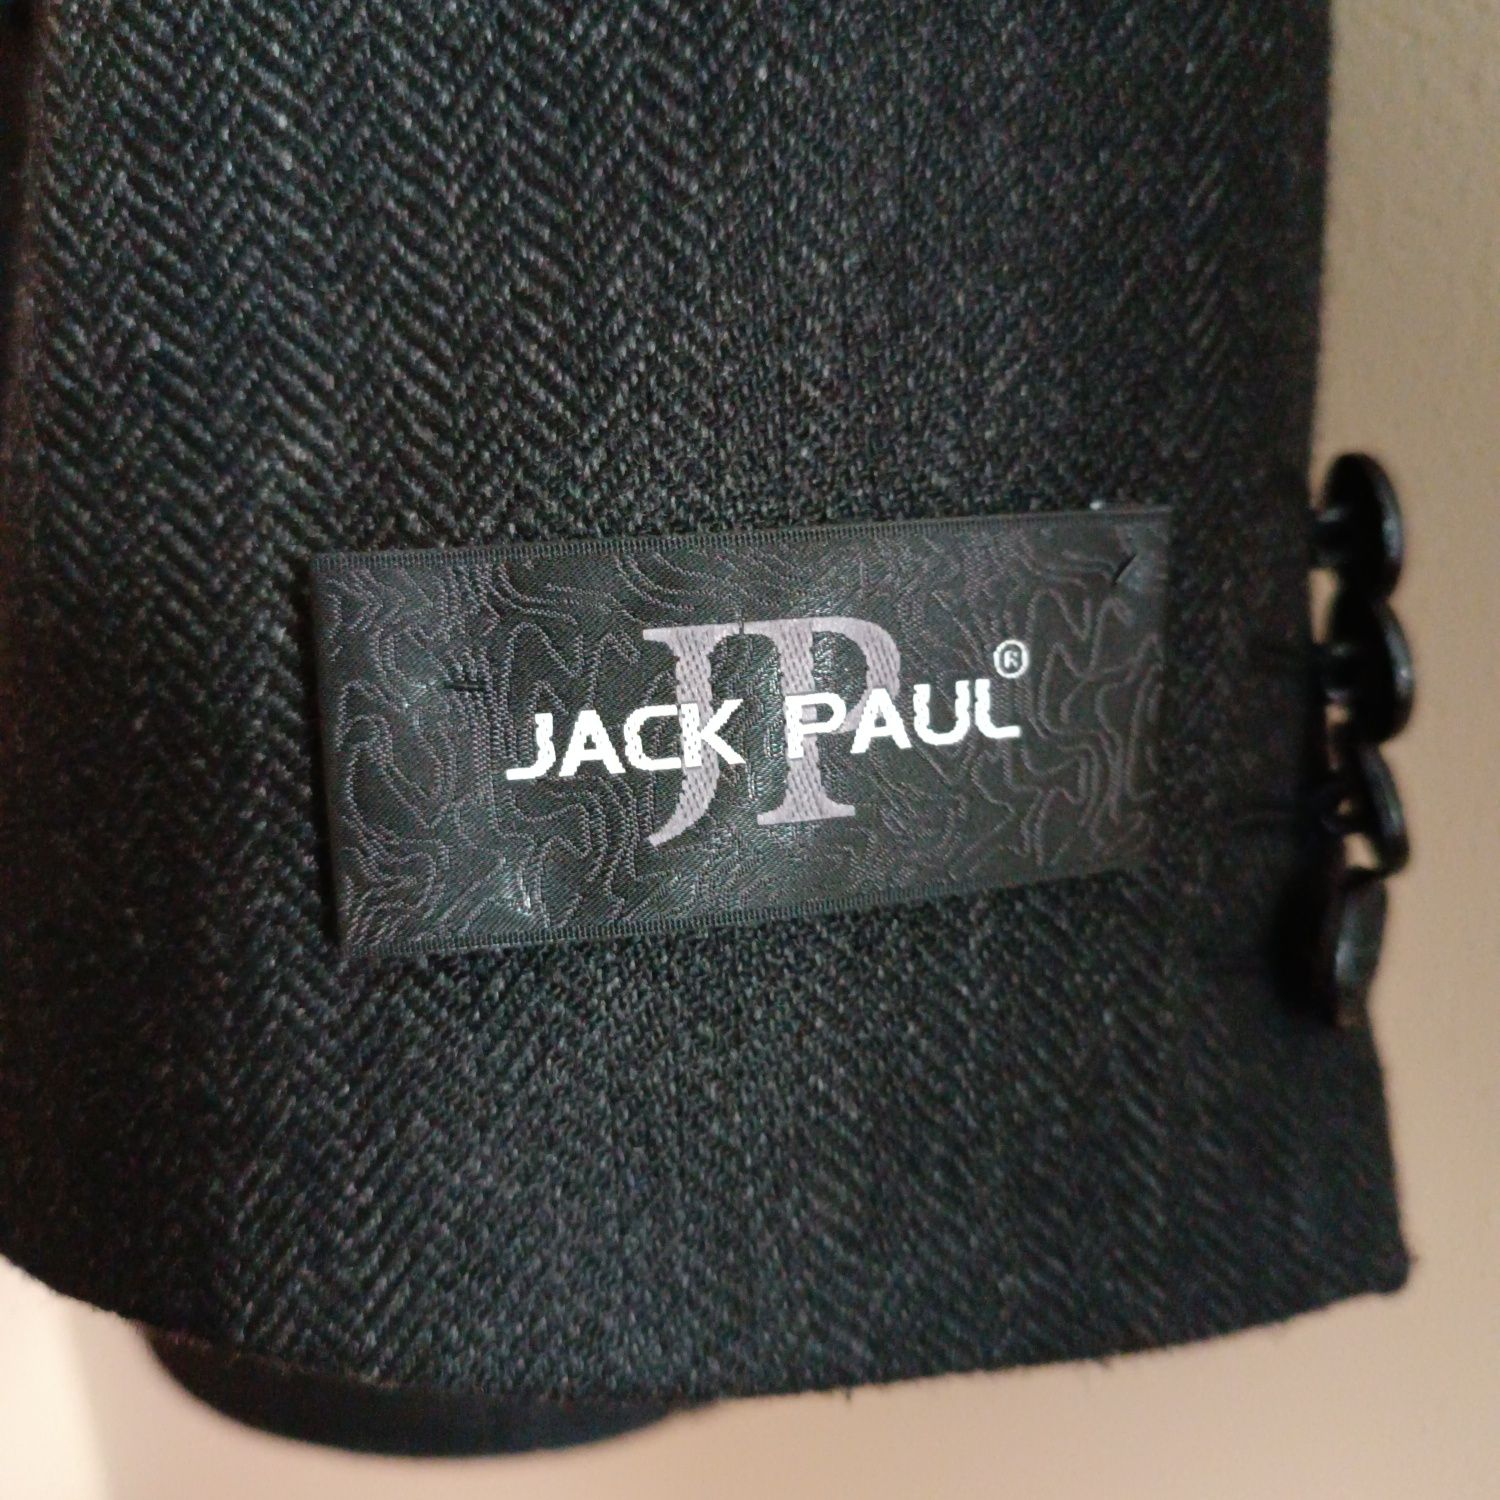 Marynarka Jack Paul nowa!!